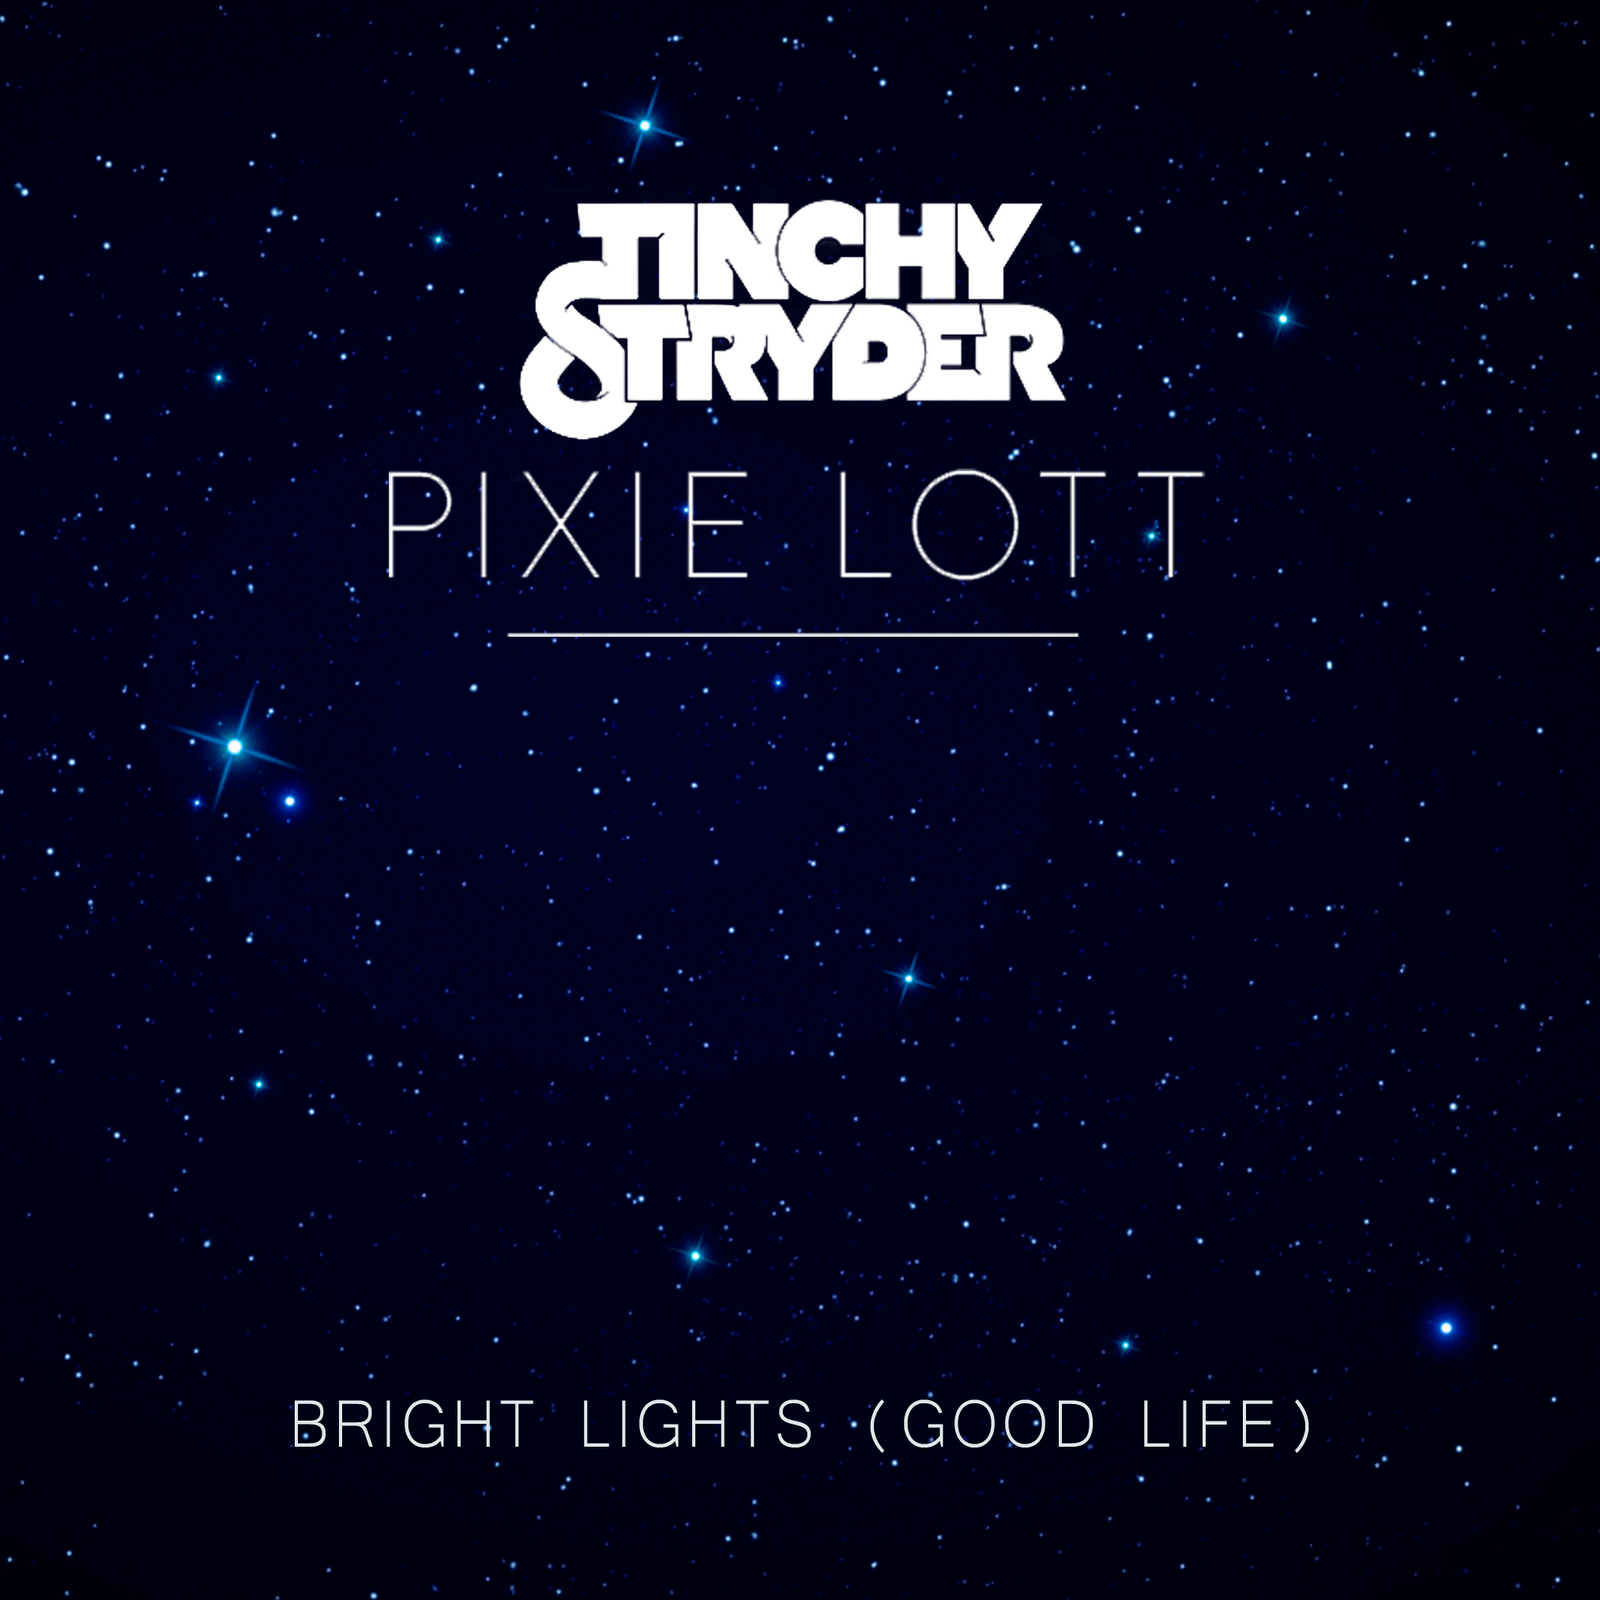 http://3.bp.blogspot.com/-kWw40qbqn1c/TwYmDc6zayI/AAAAAAAAAok/CTRiizxrIXQ/s1600/Tinchy+Stryder+Pixie+Lott+Bright+Lights+%2528Good+Life%2529.png